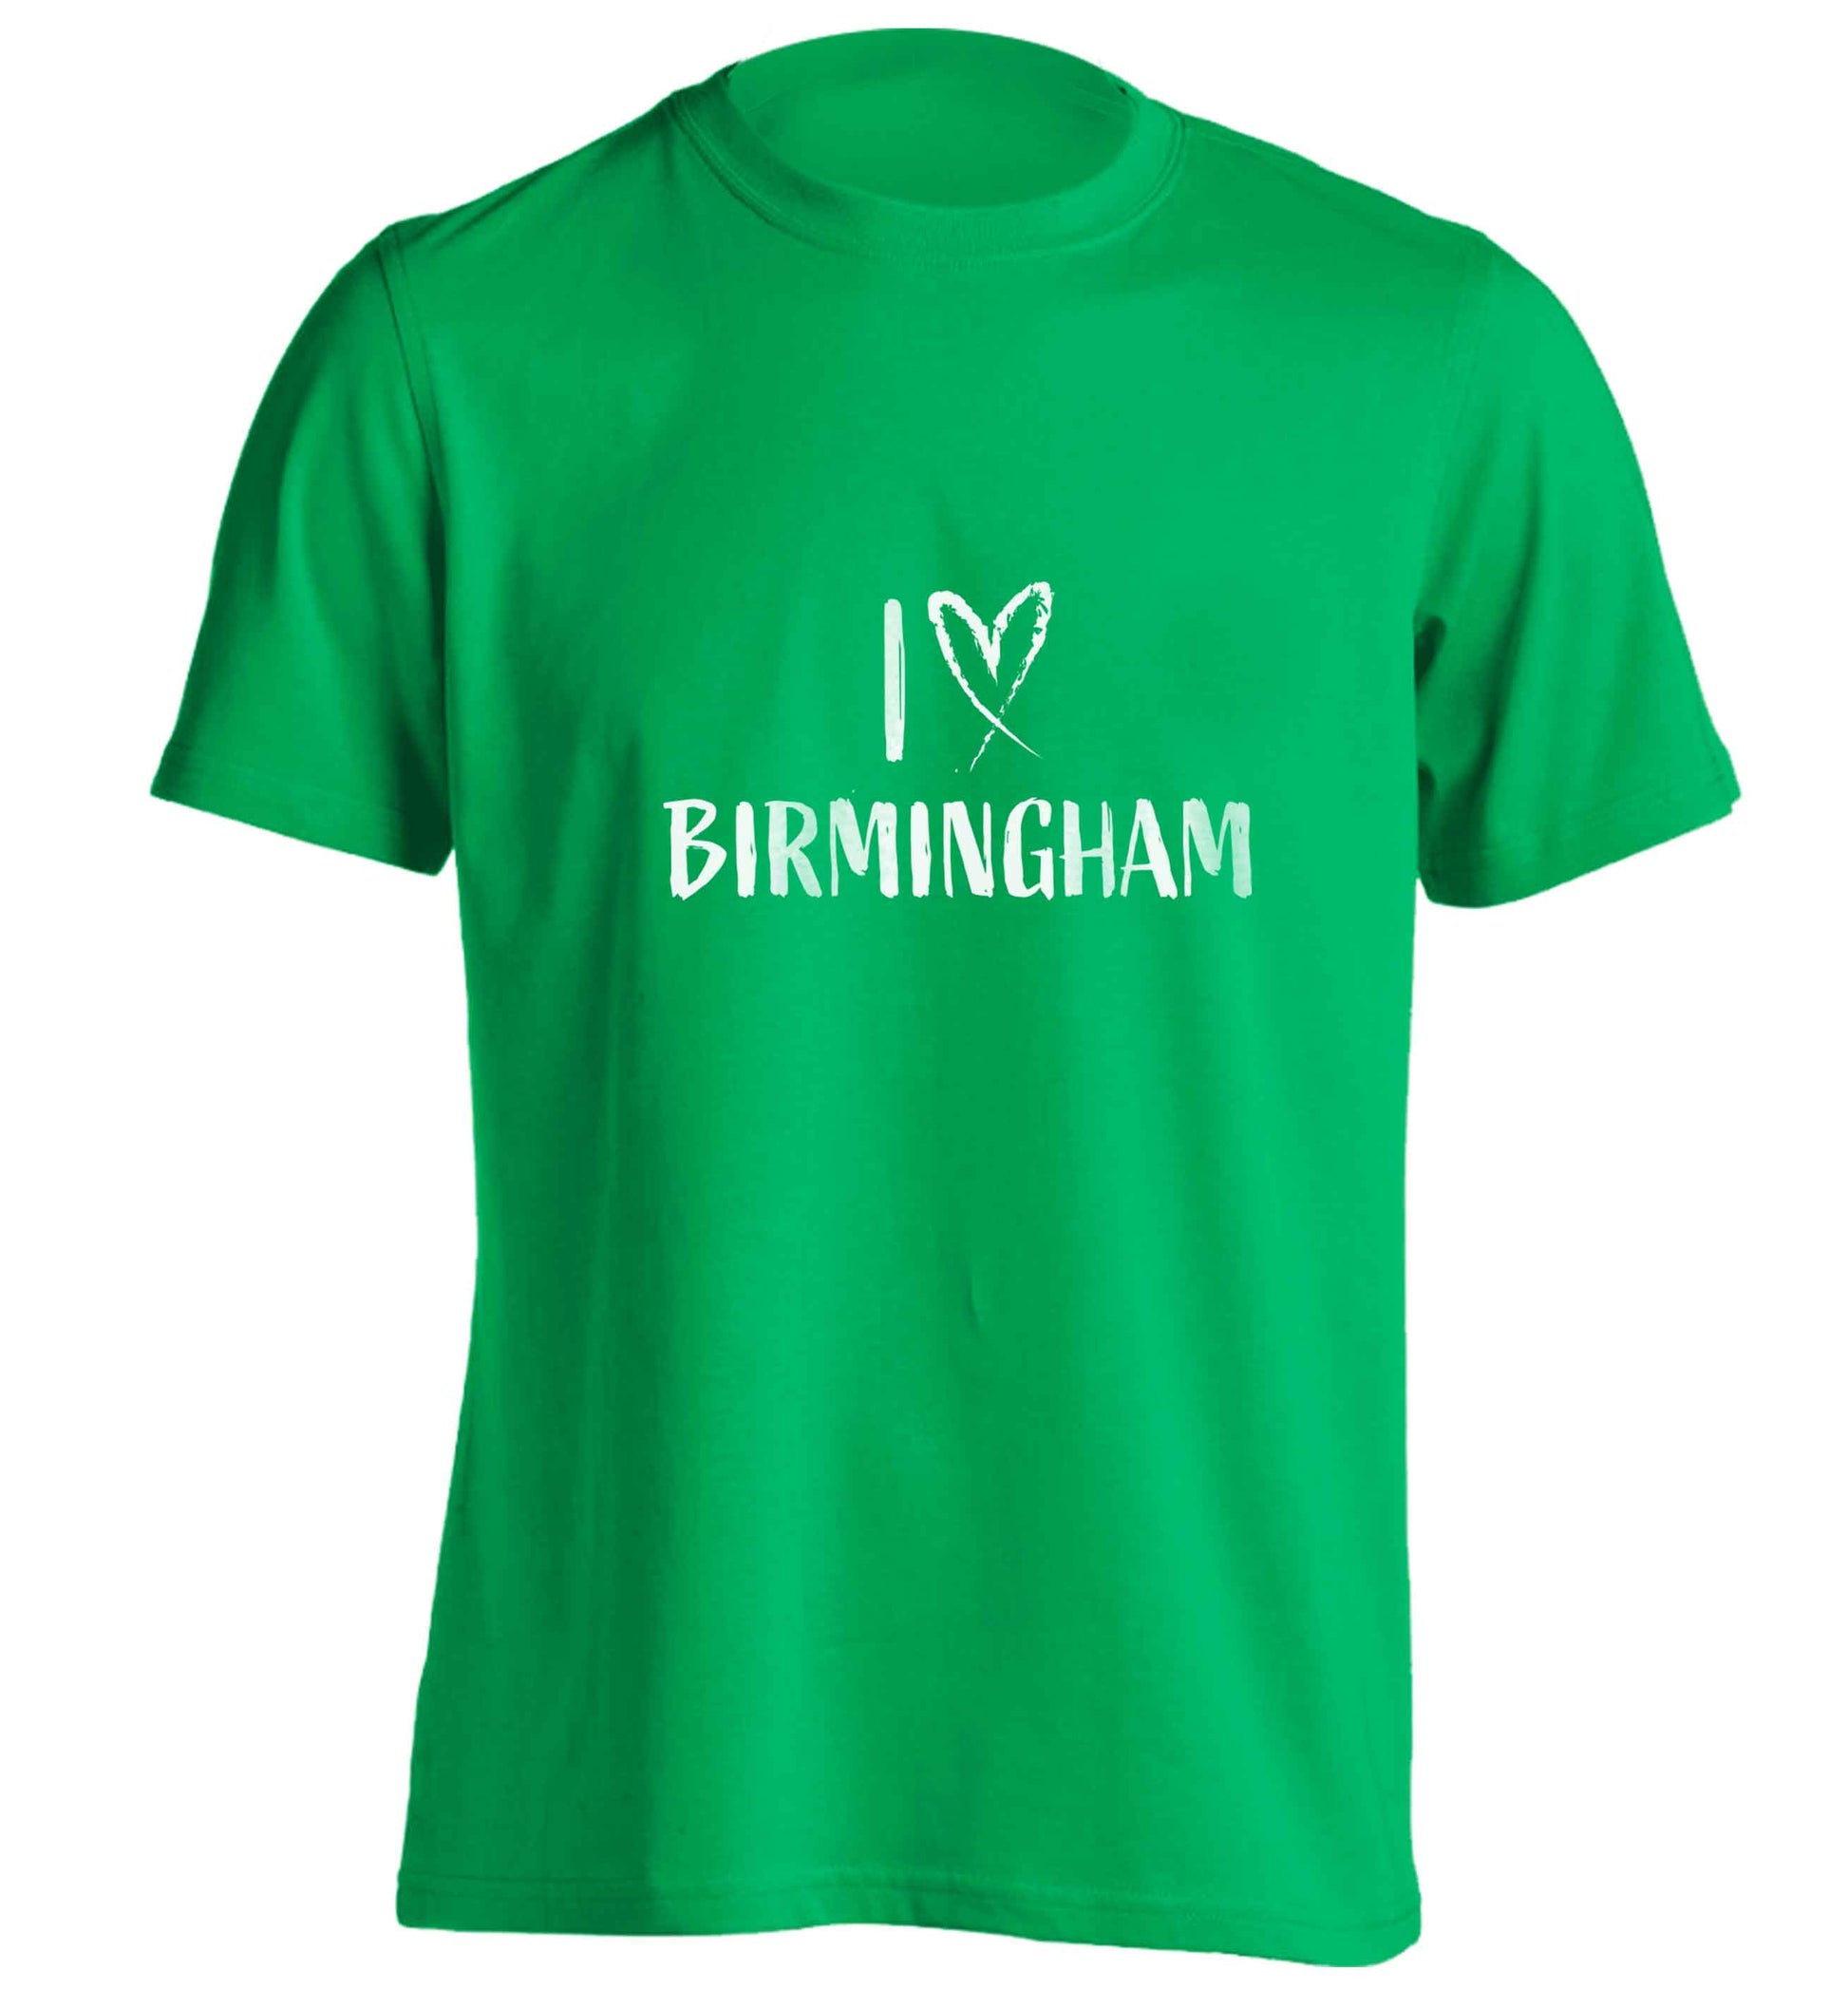 I love Birmingham adults unisex green Tshirt 2XL